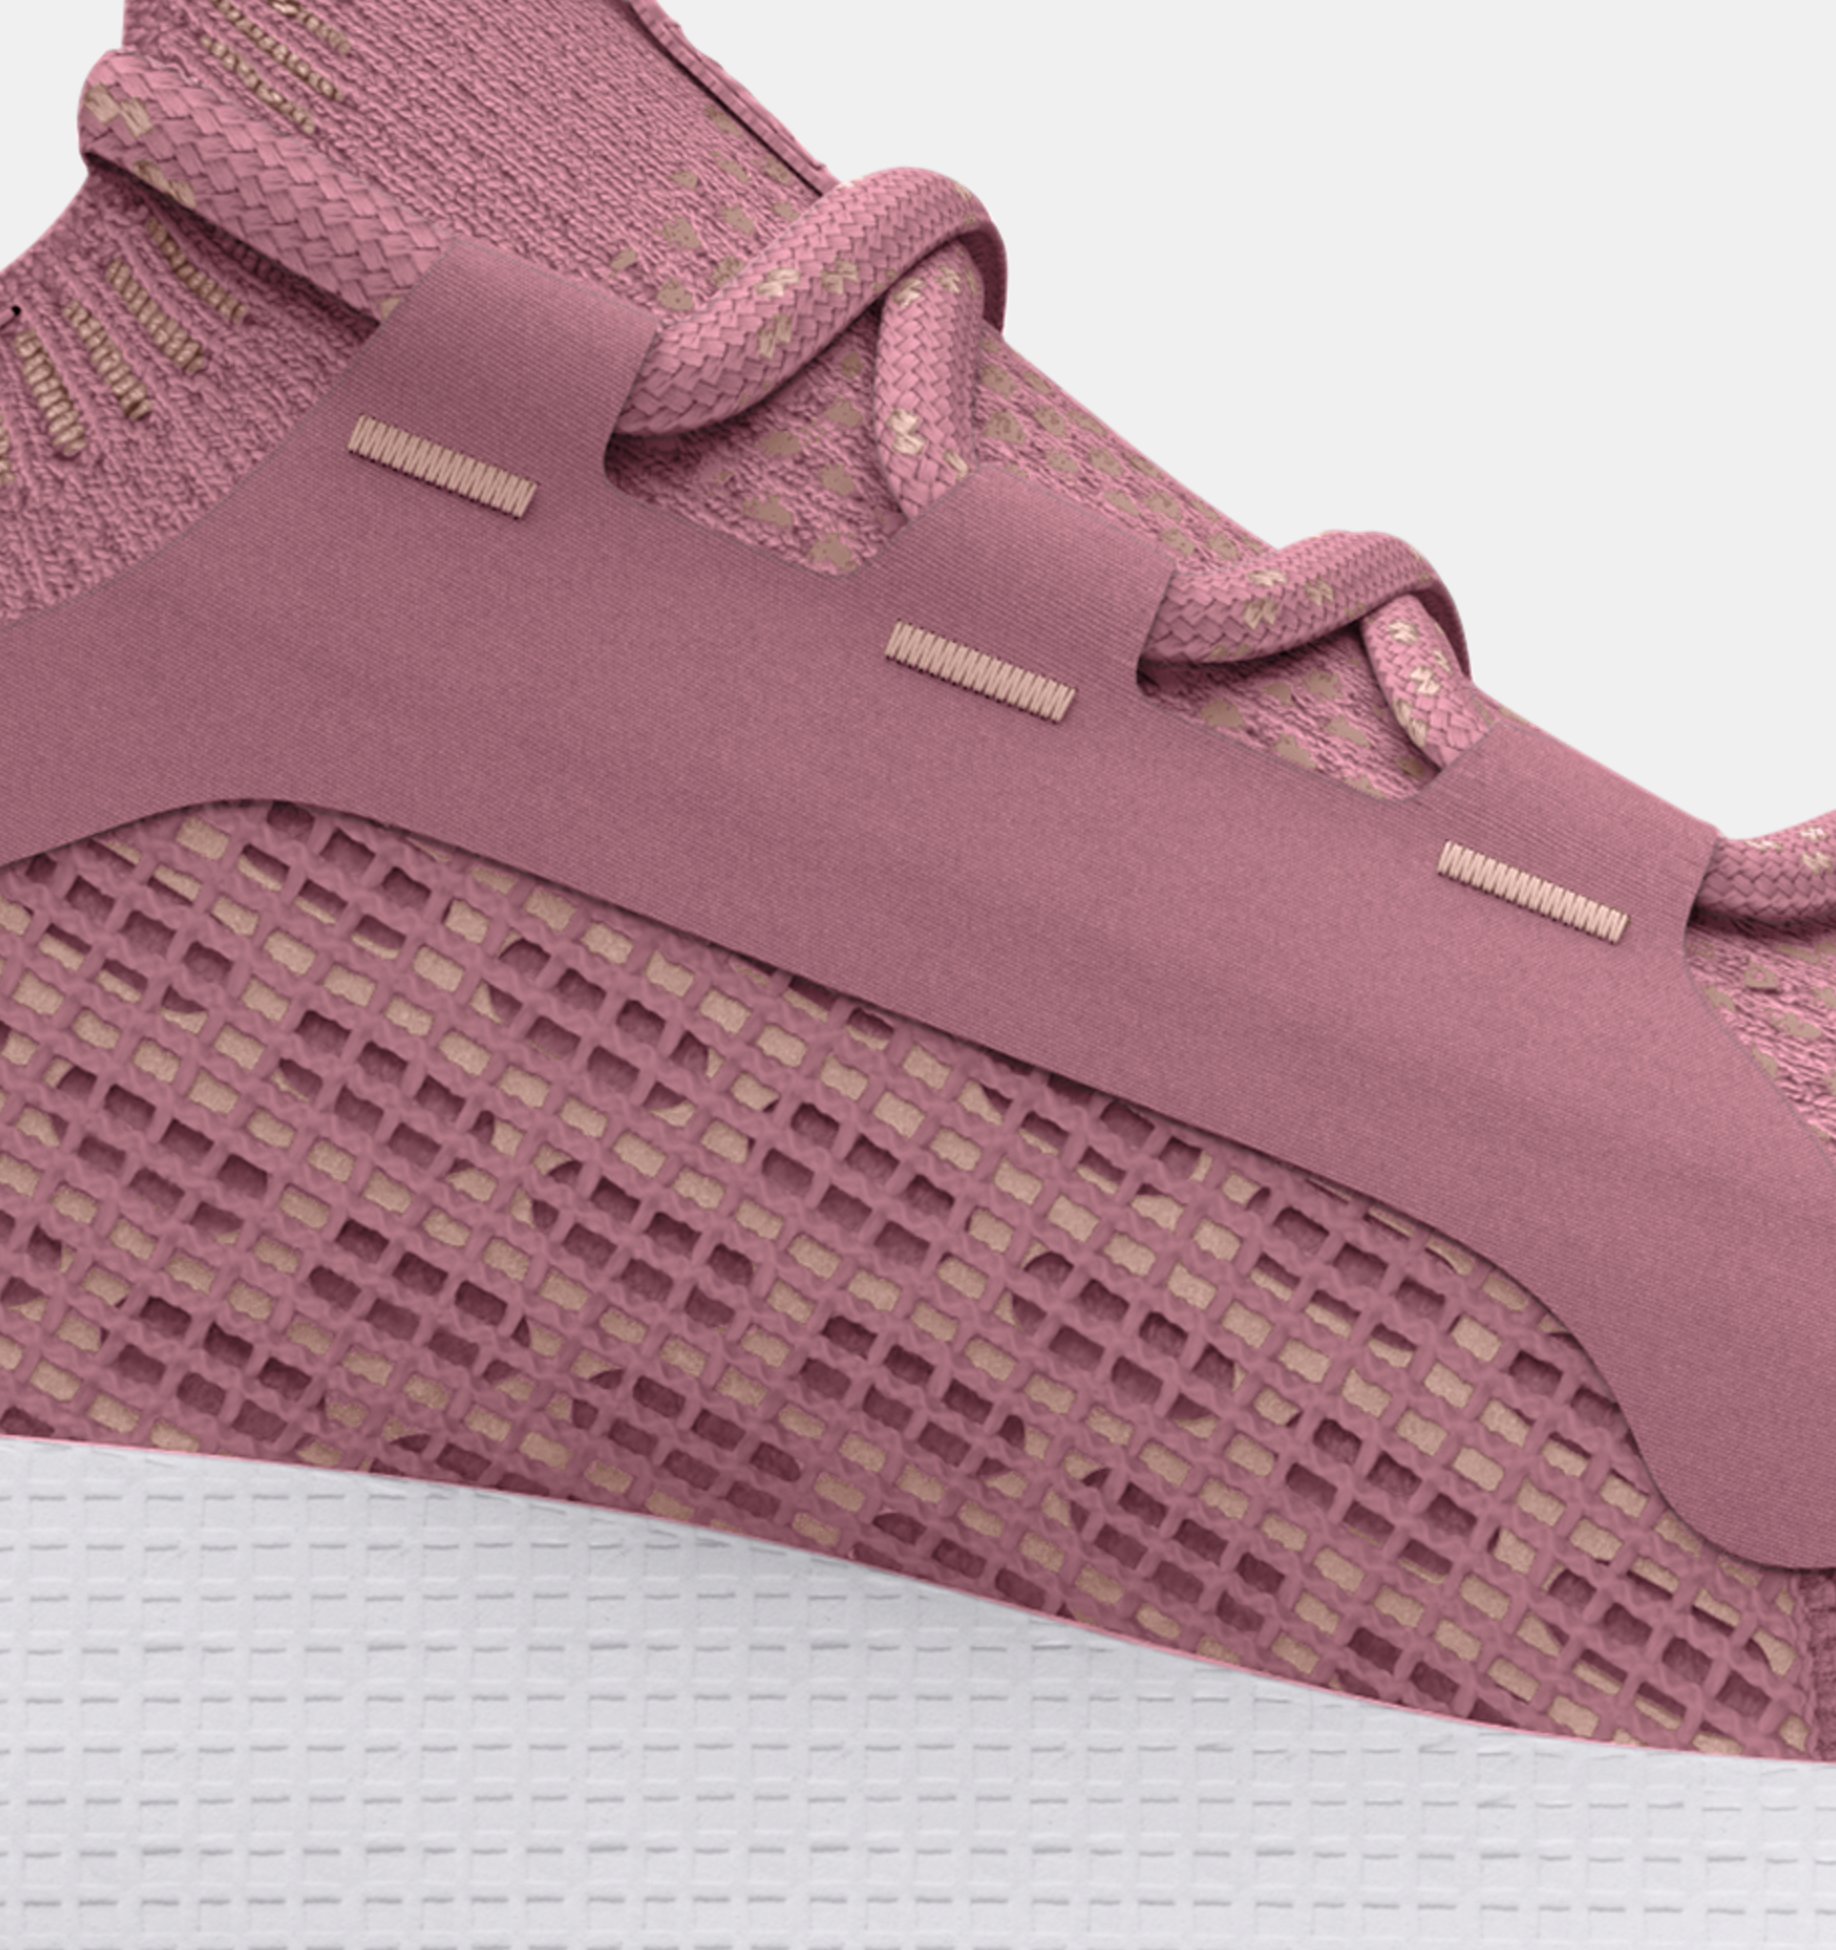 Under Armour Running Shoes Womens 7.5 Pink UA HOVR Phantom SE Mesh  3021589-600